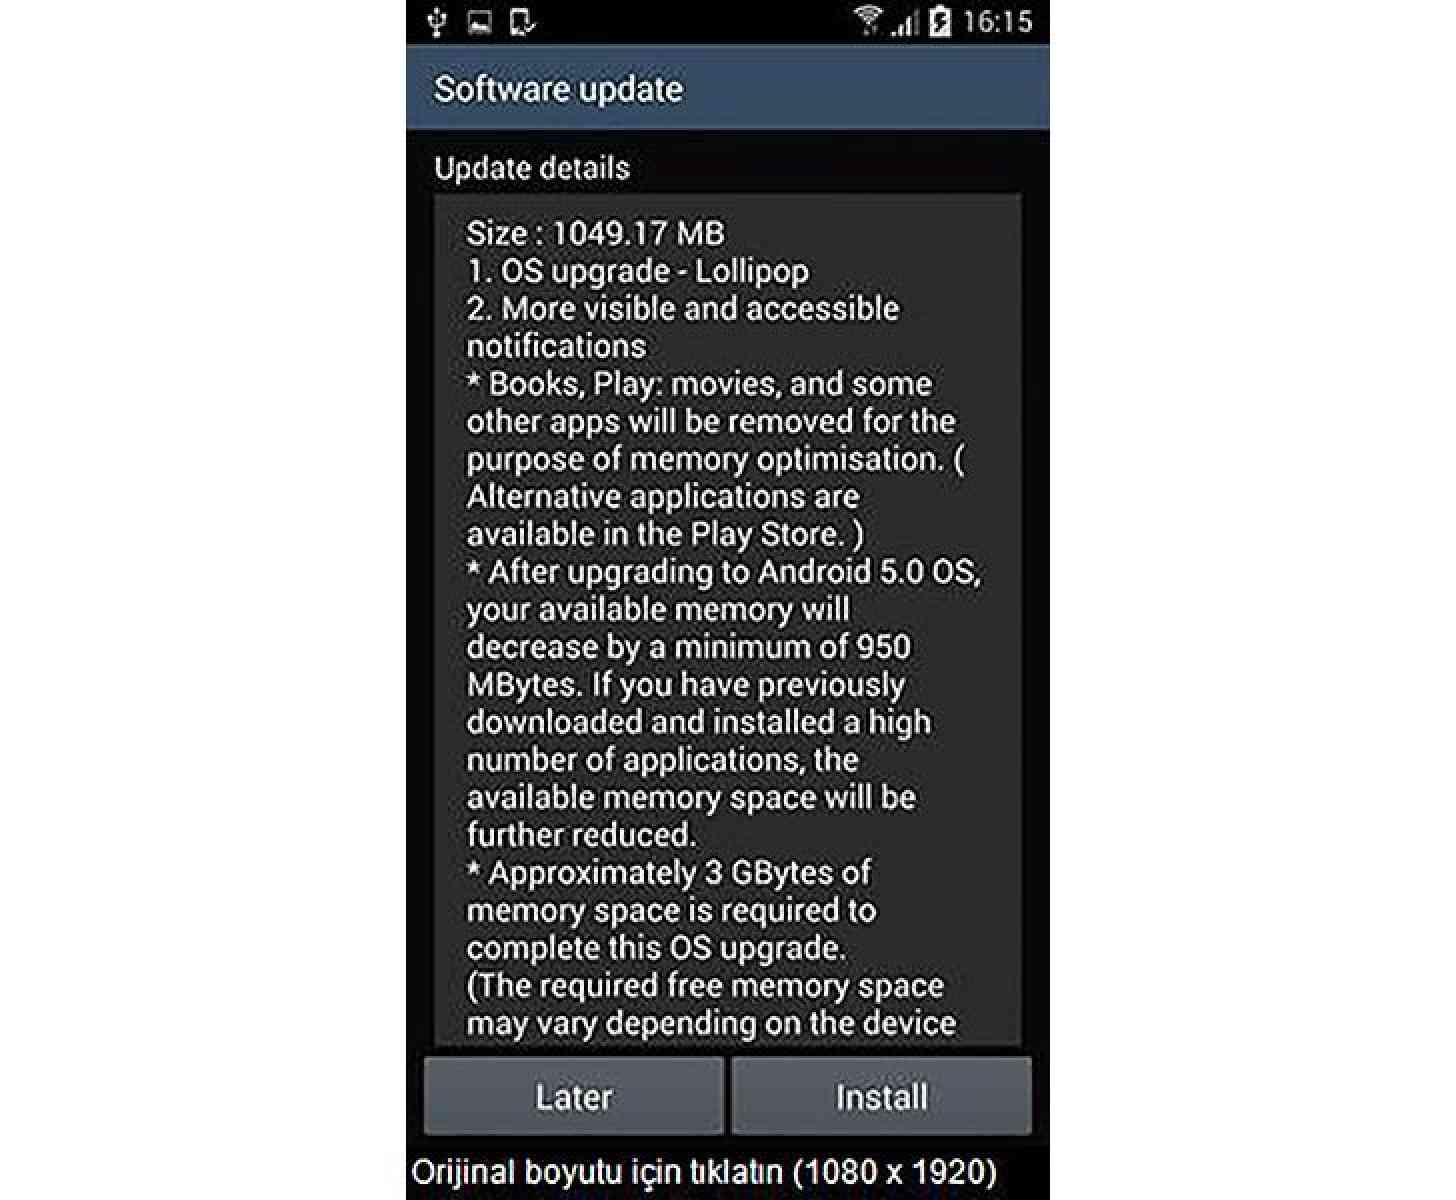 Samsung Galaxy S4 Android 5.0 Lollipop update screenshot